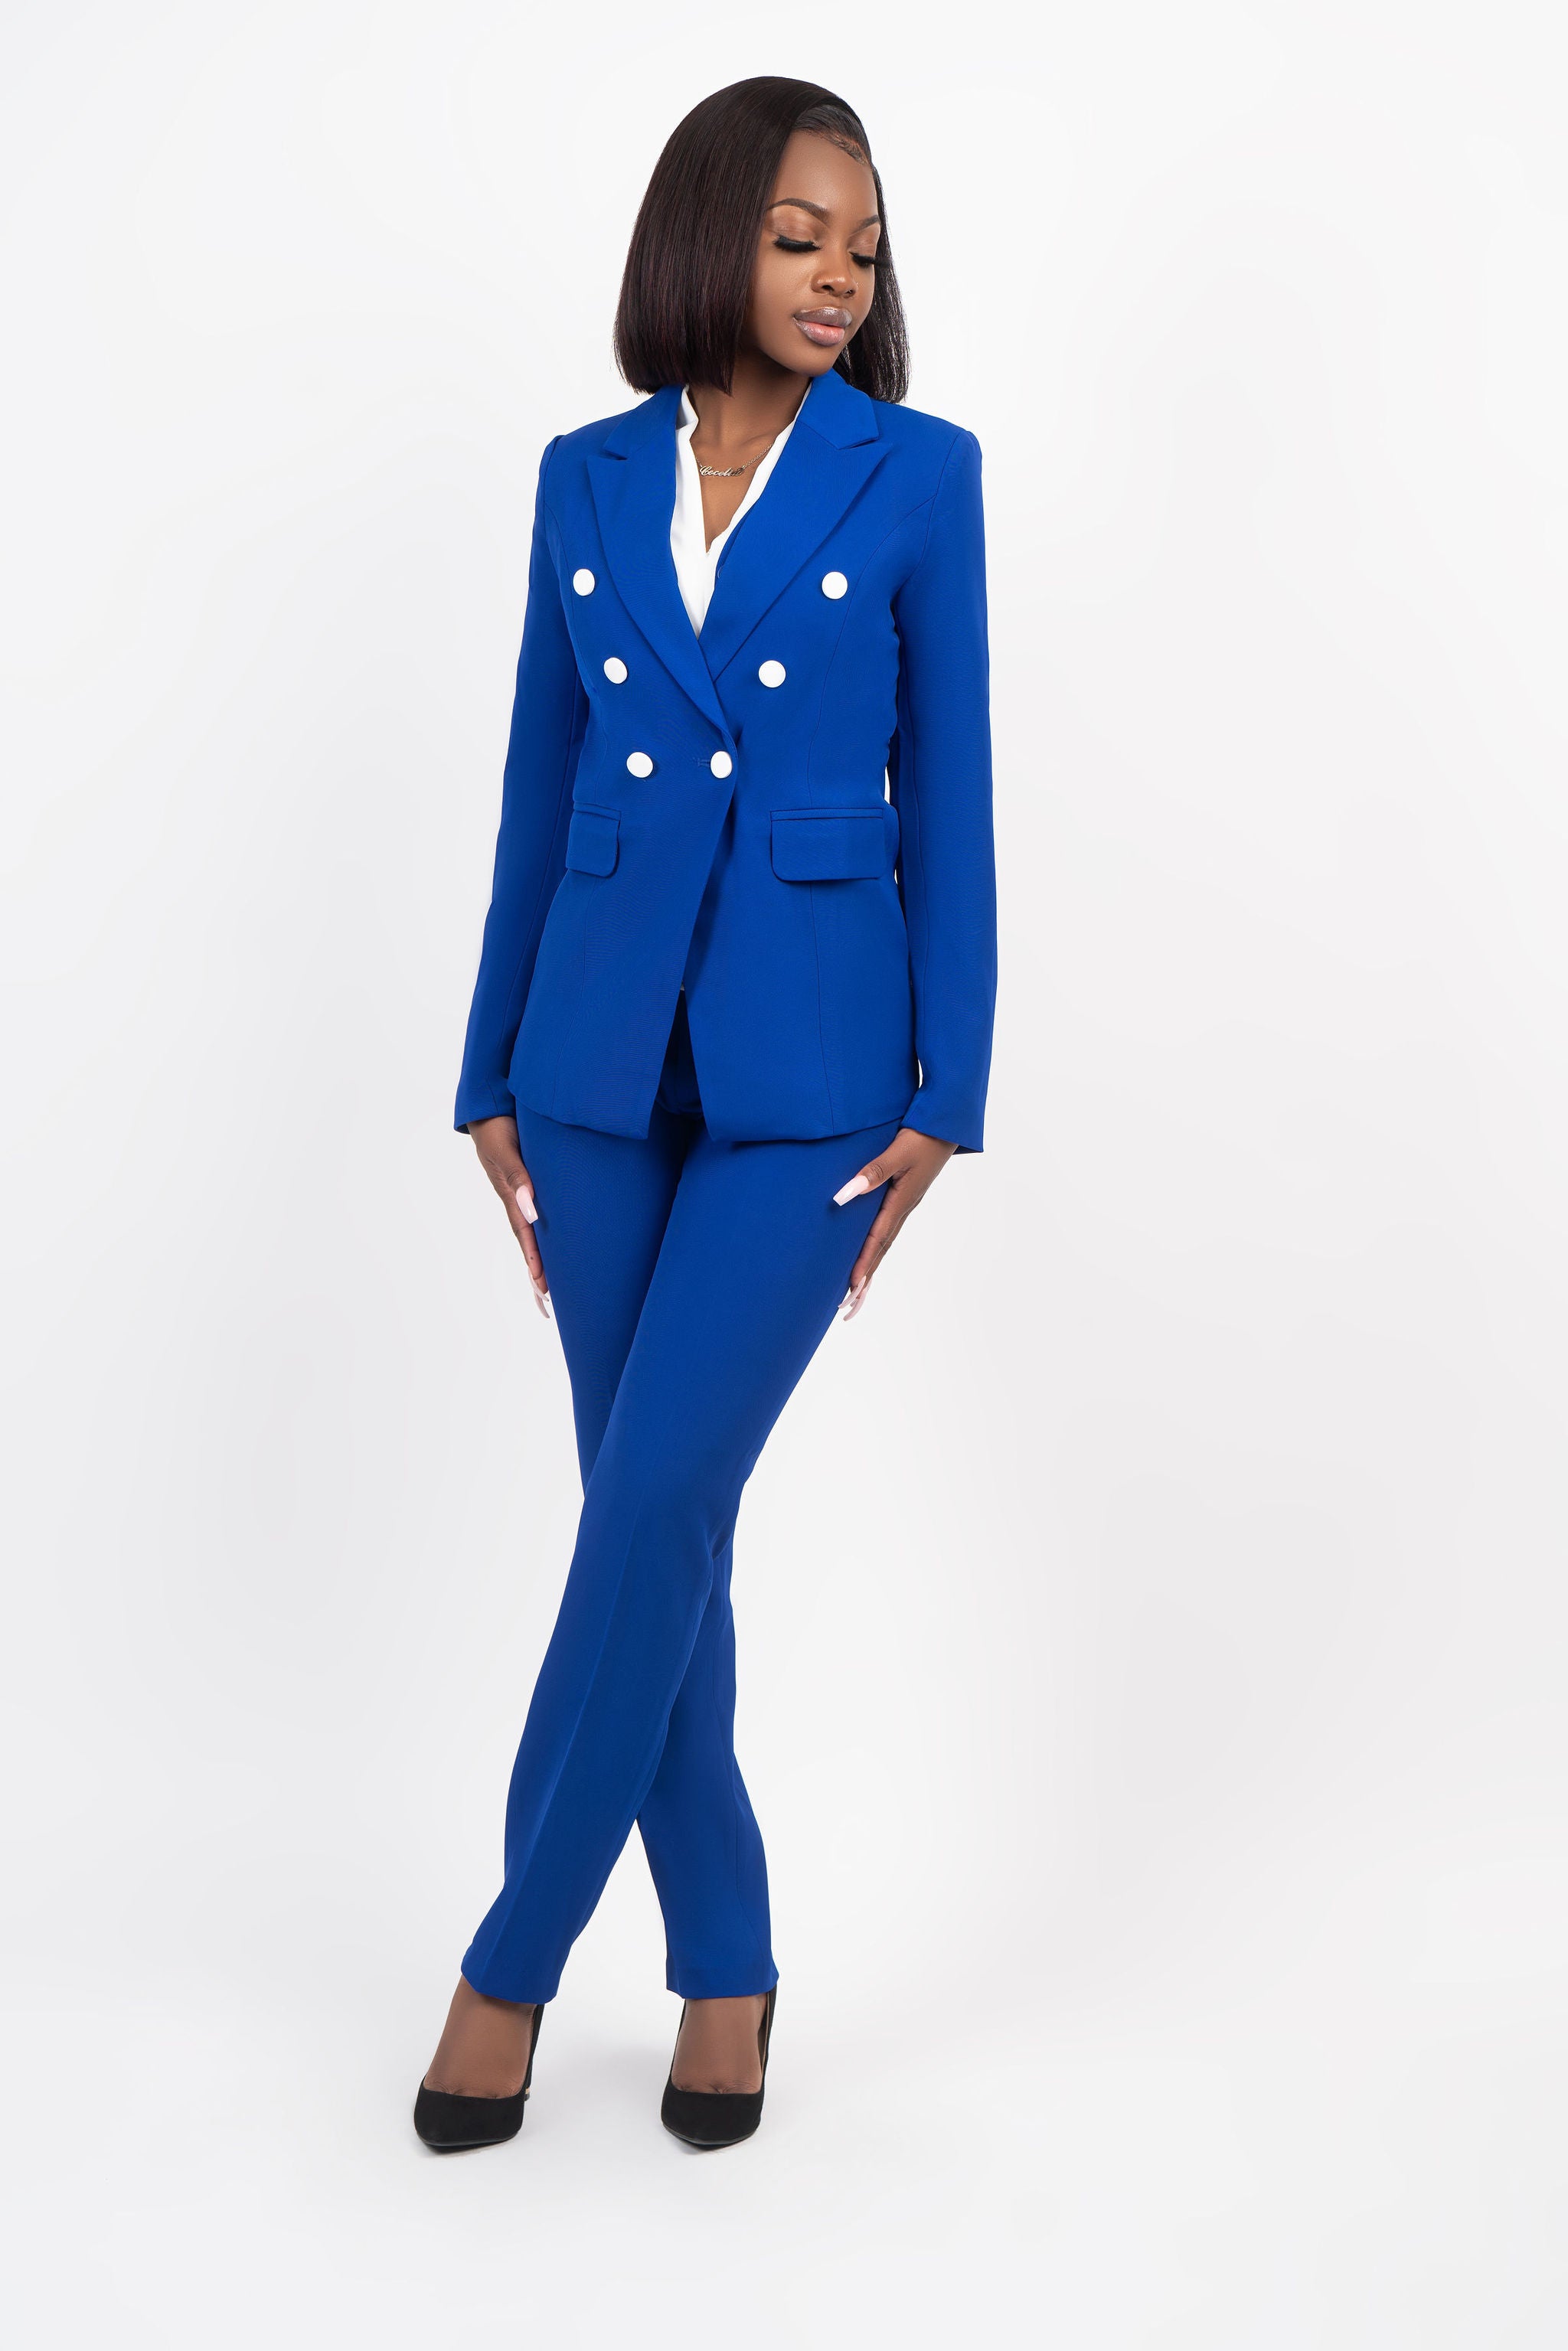 Blue You Away Suit - Belle Business Wear 